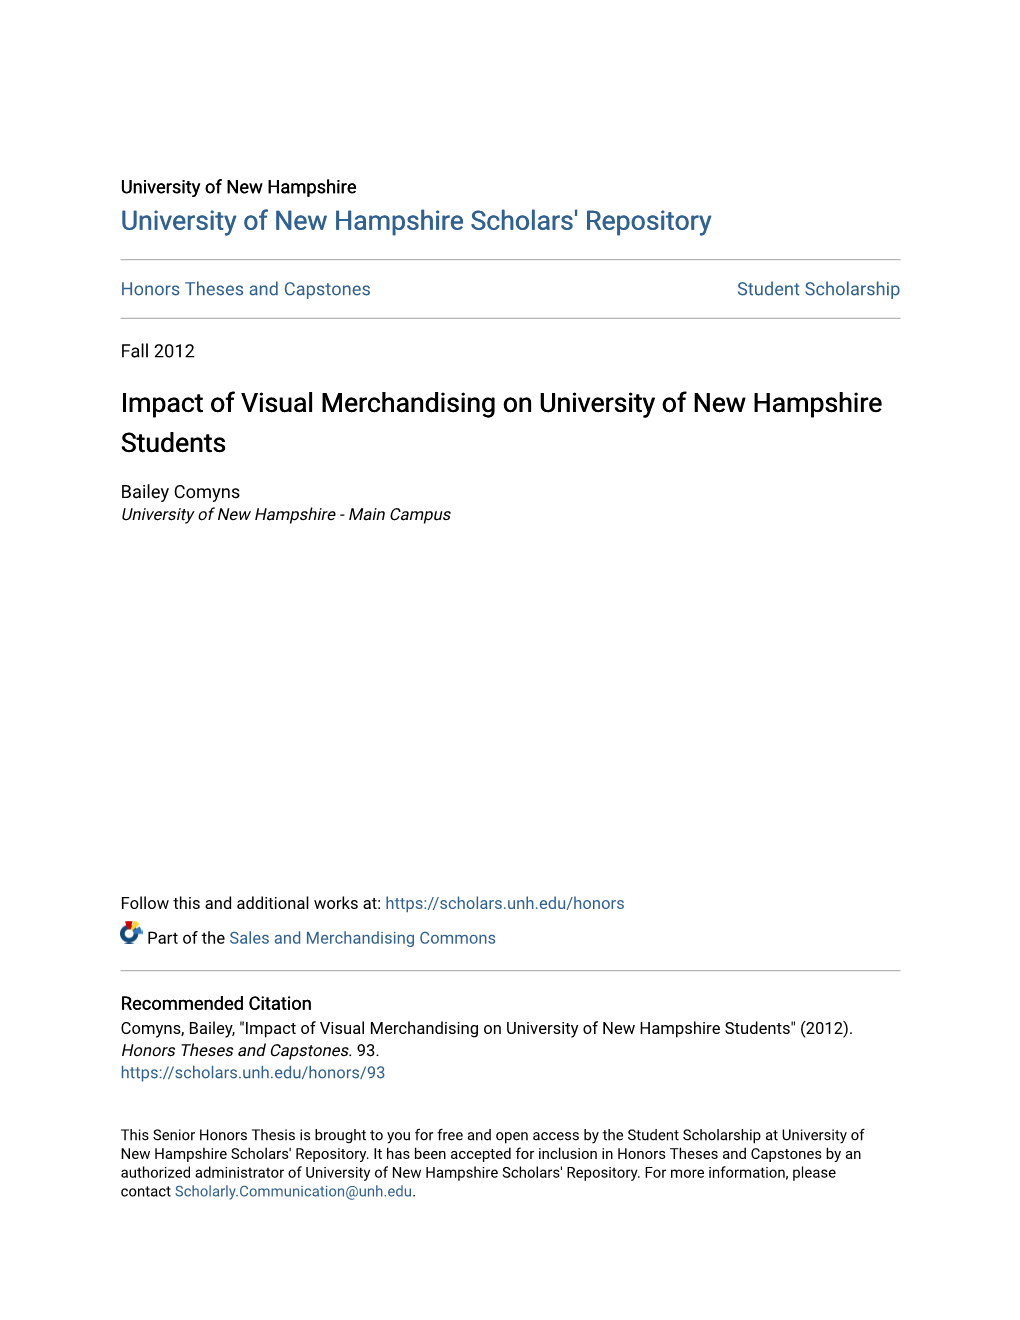 Impact of Visual Merchandising on University of New Hampshire Students